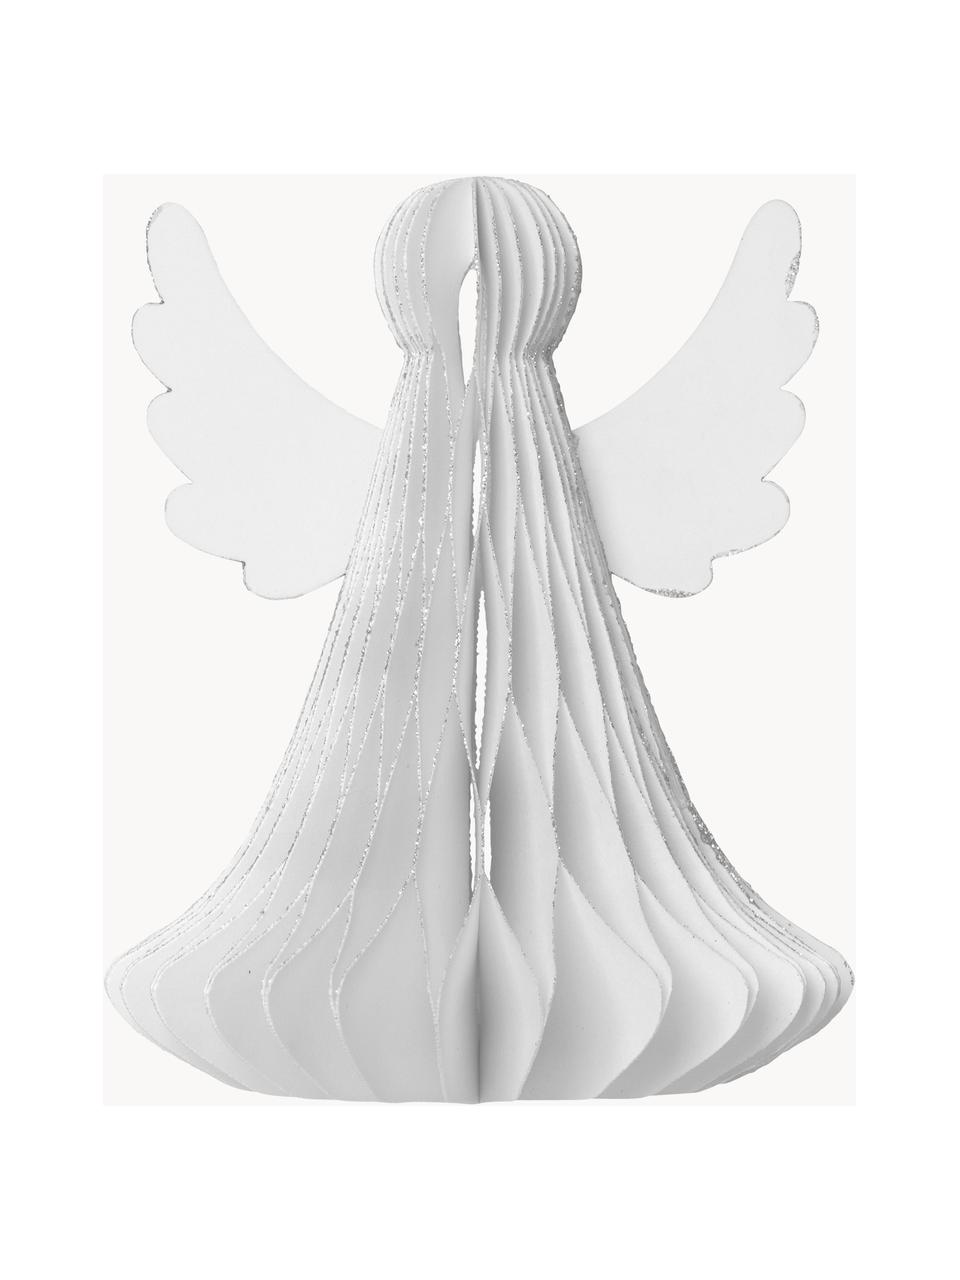 Dekorácia Angel, 2 ks, Papier, Biela, Ø 10 x V 12 cm